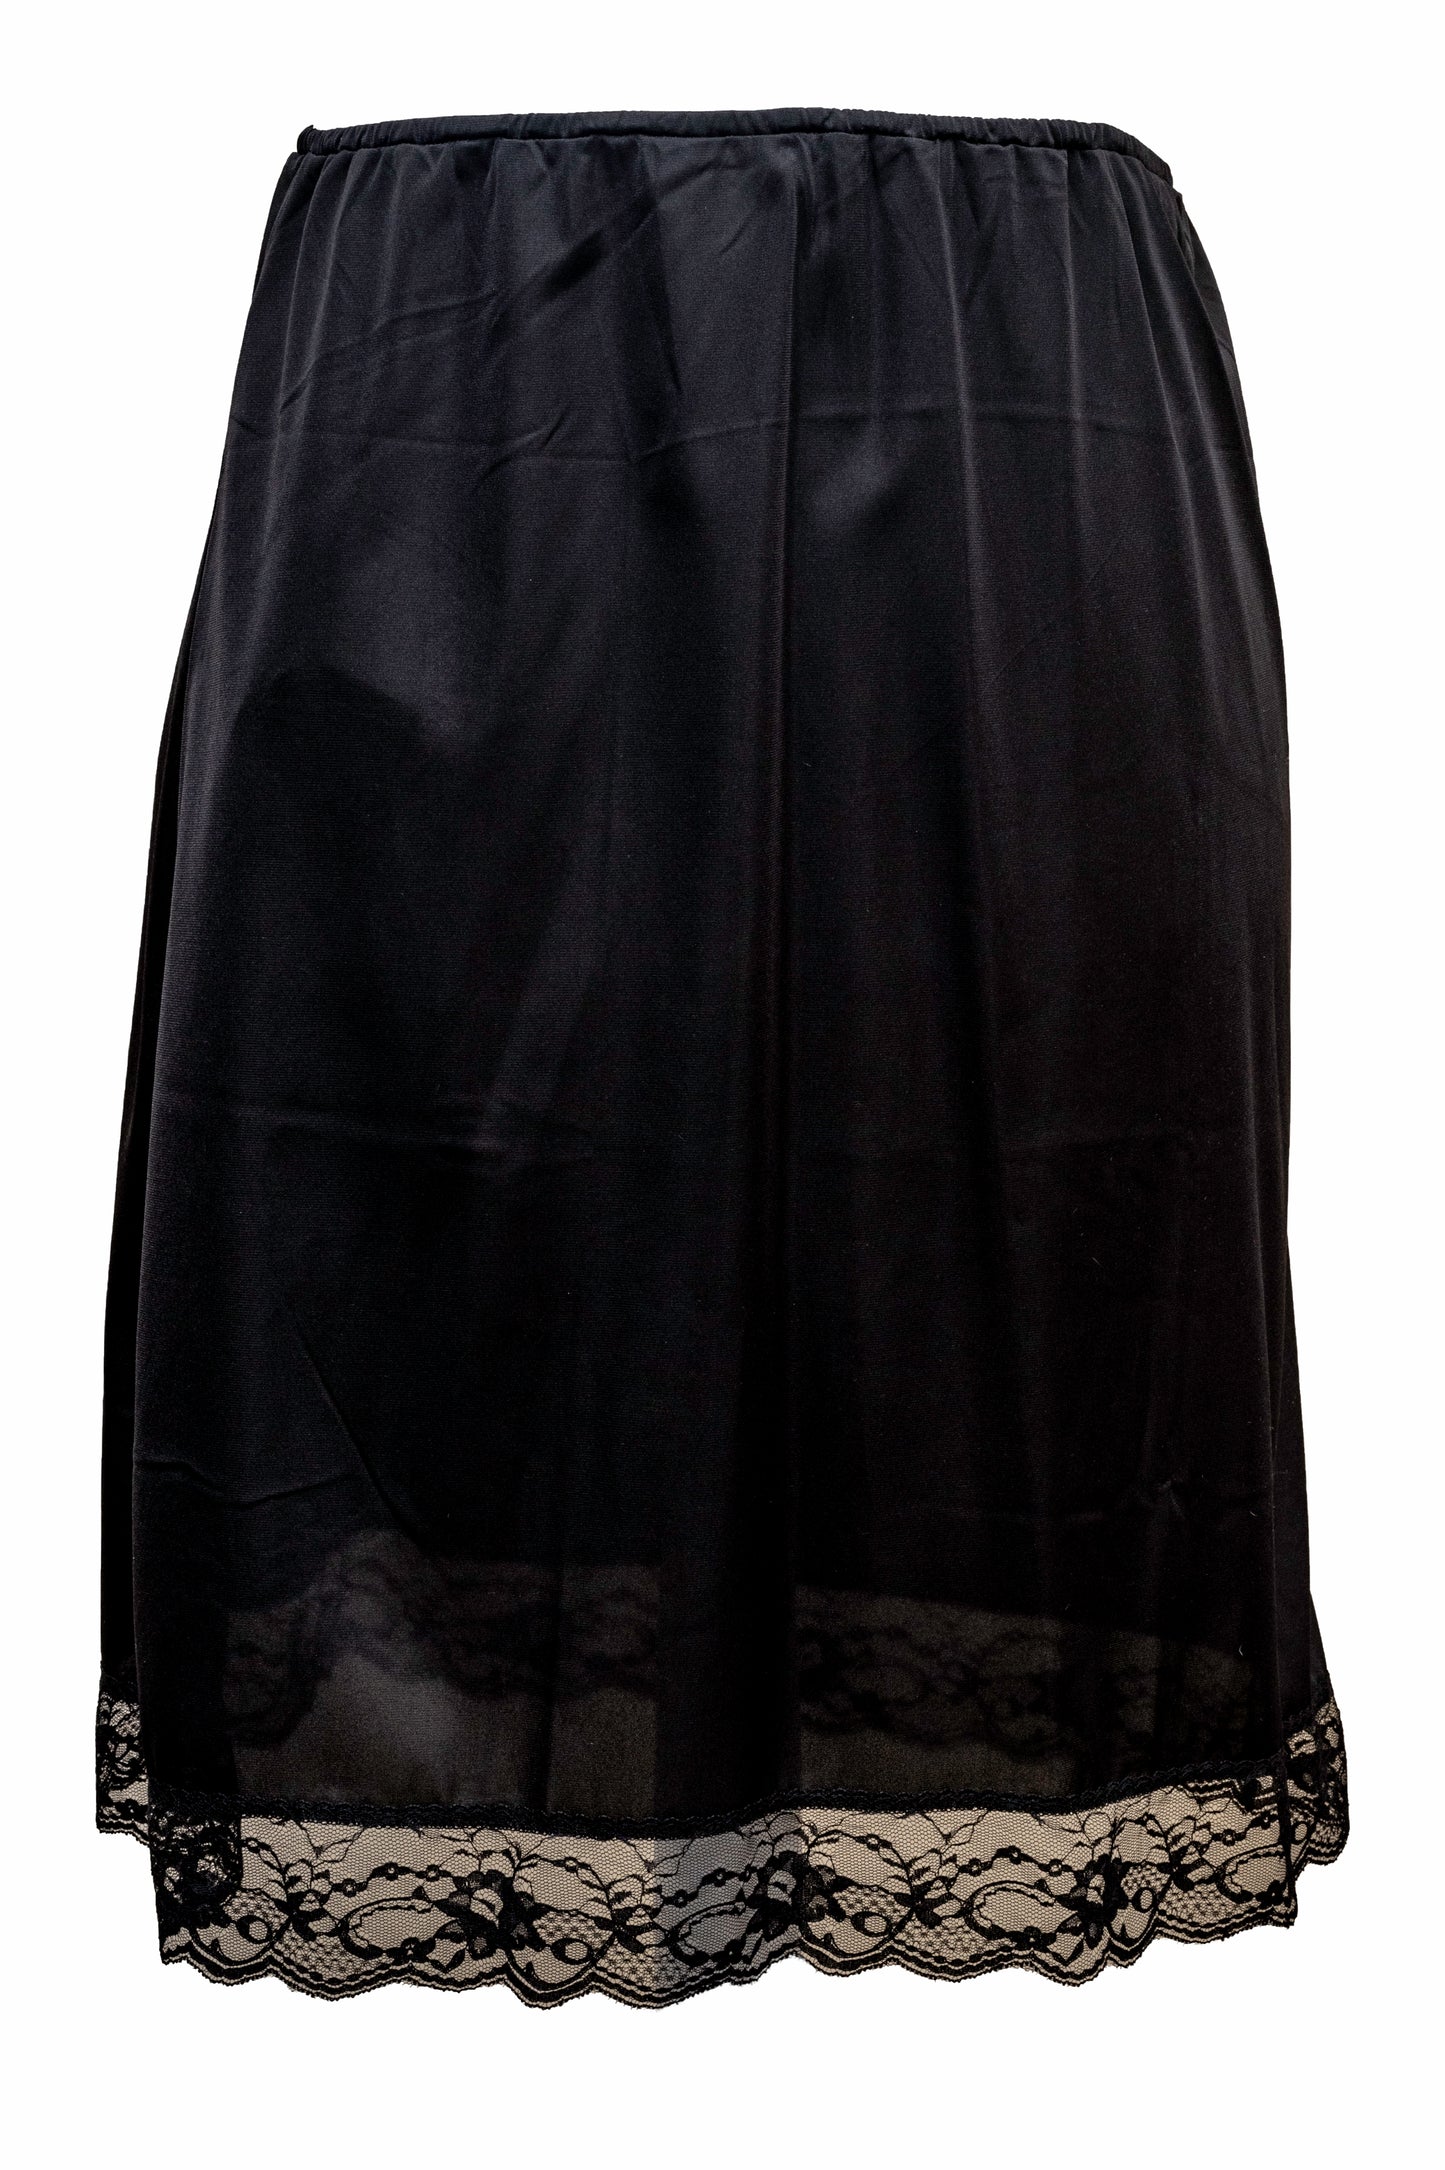 Ladies-Half Slip Petticoat-18''Length-Ivory